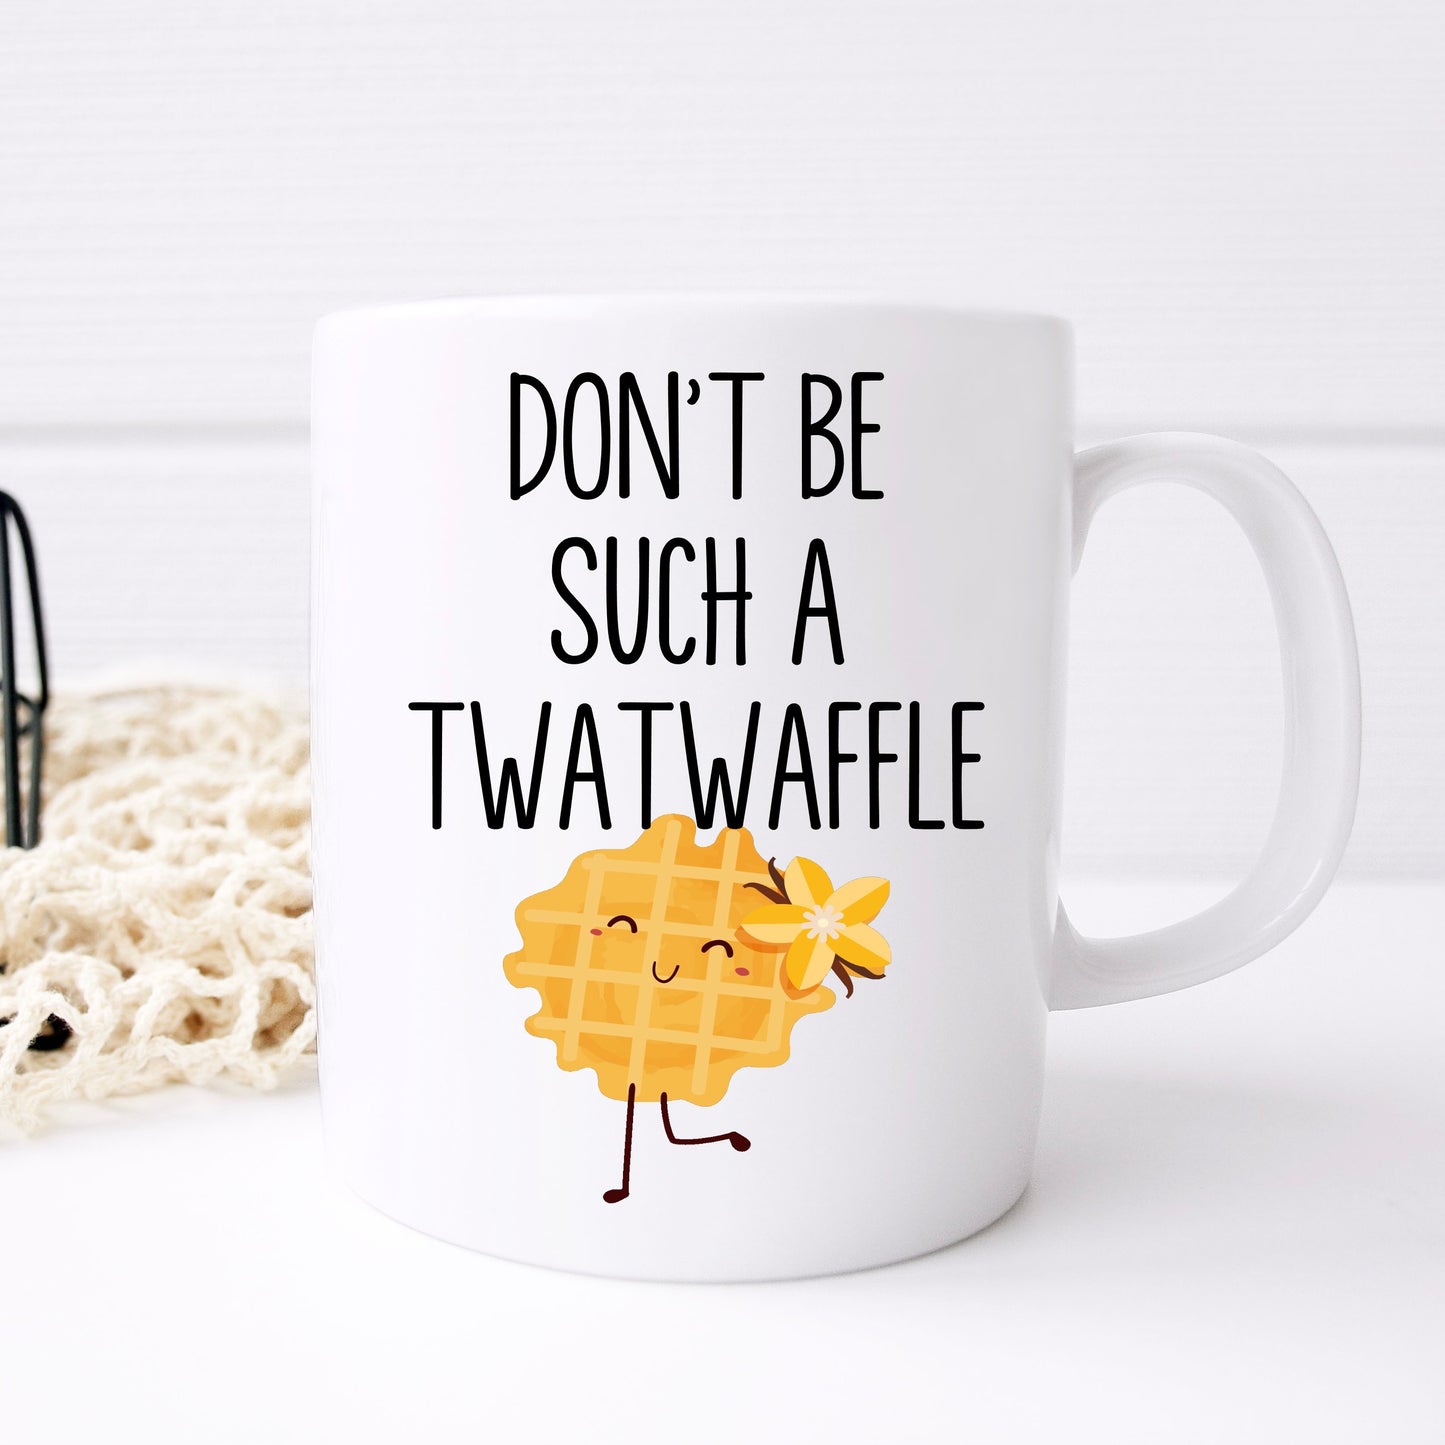 Don’t Be A Waffle Mug